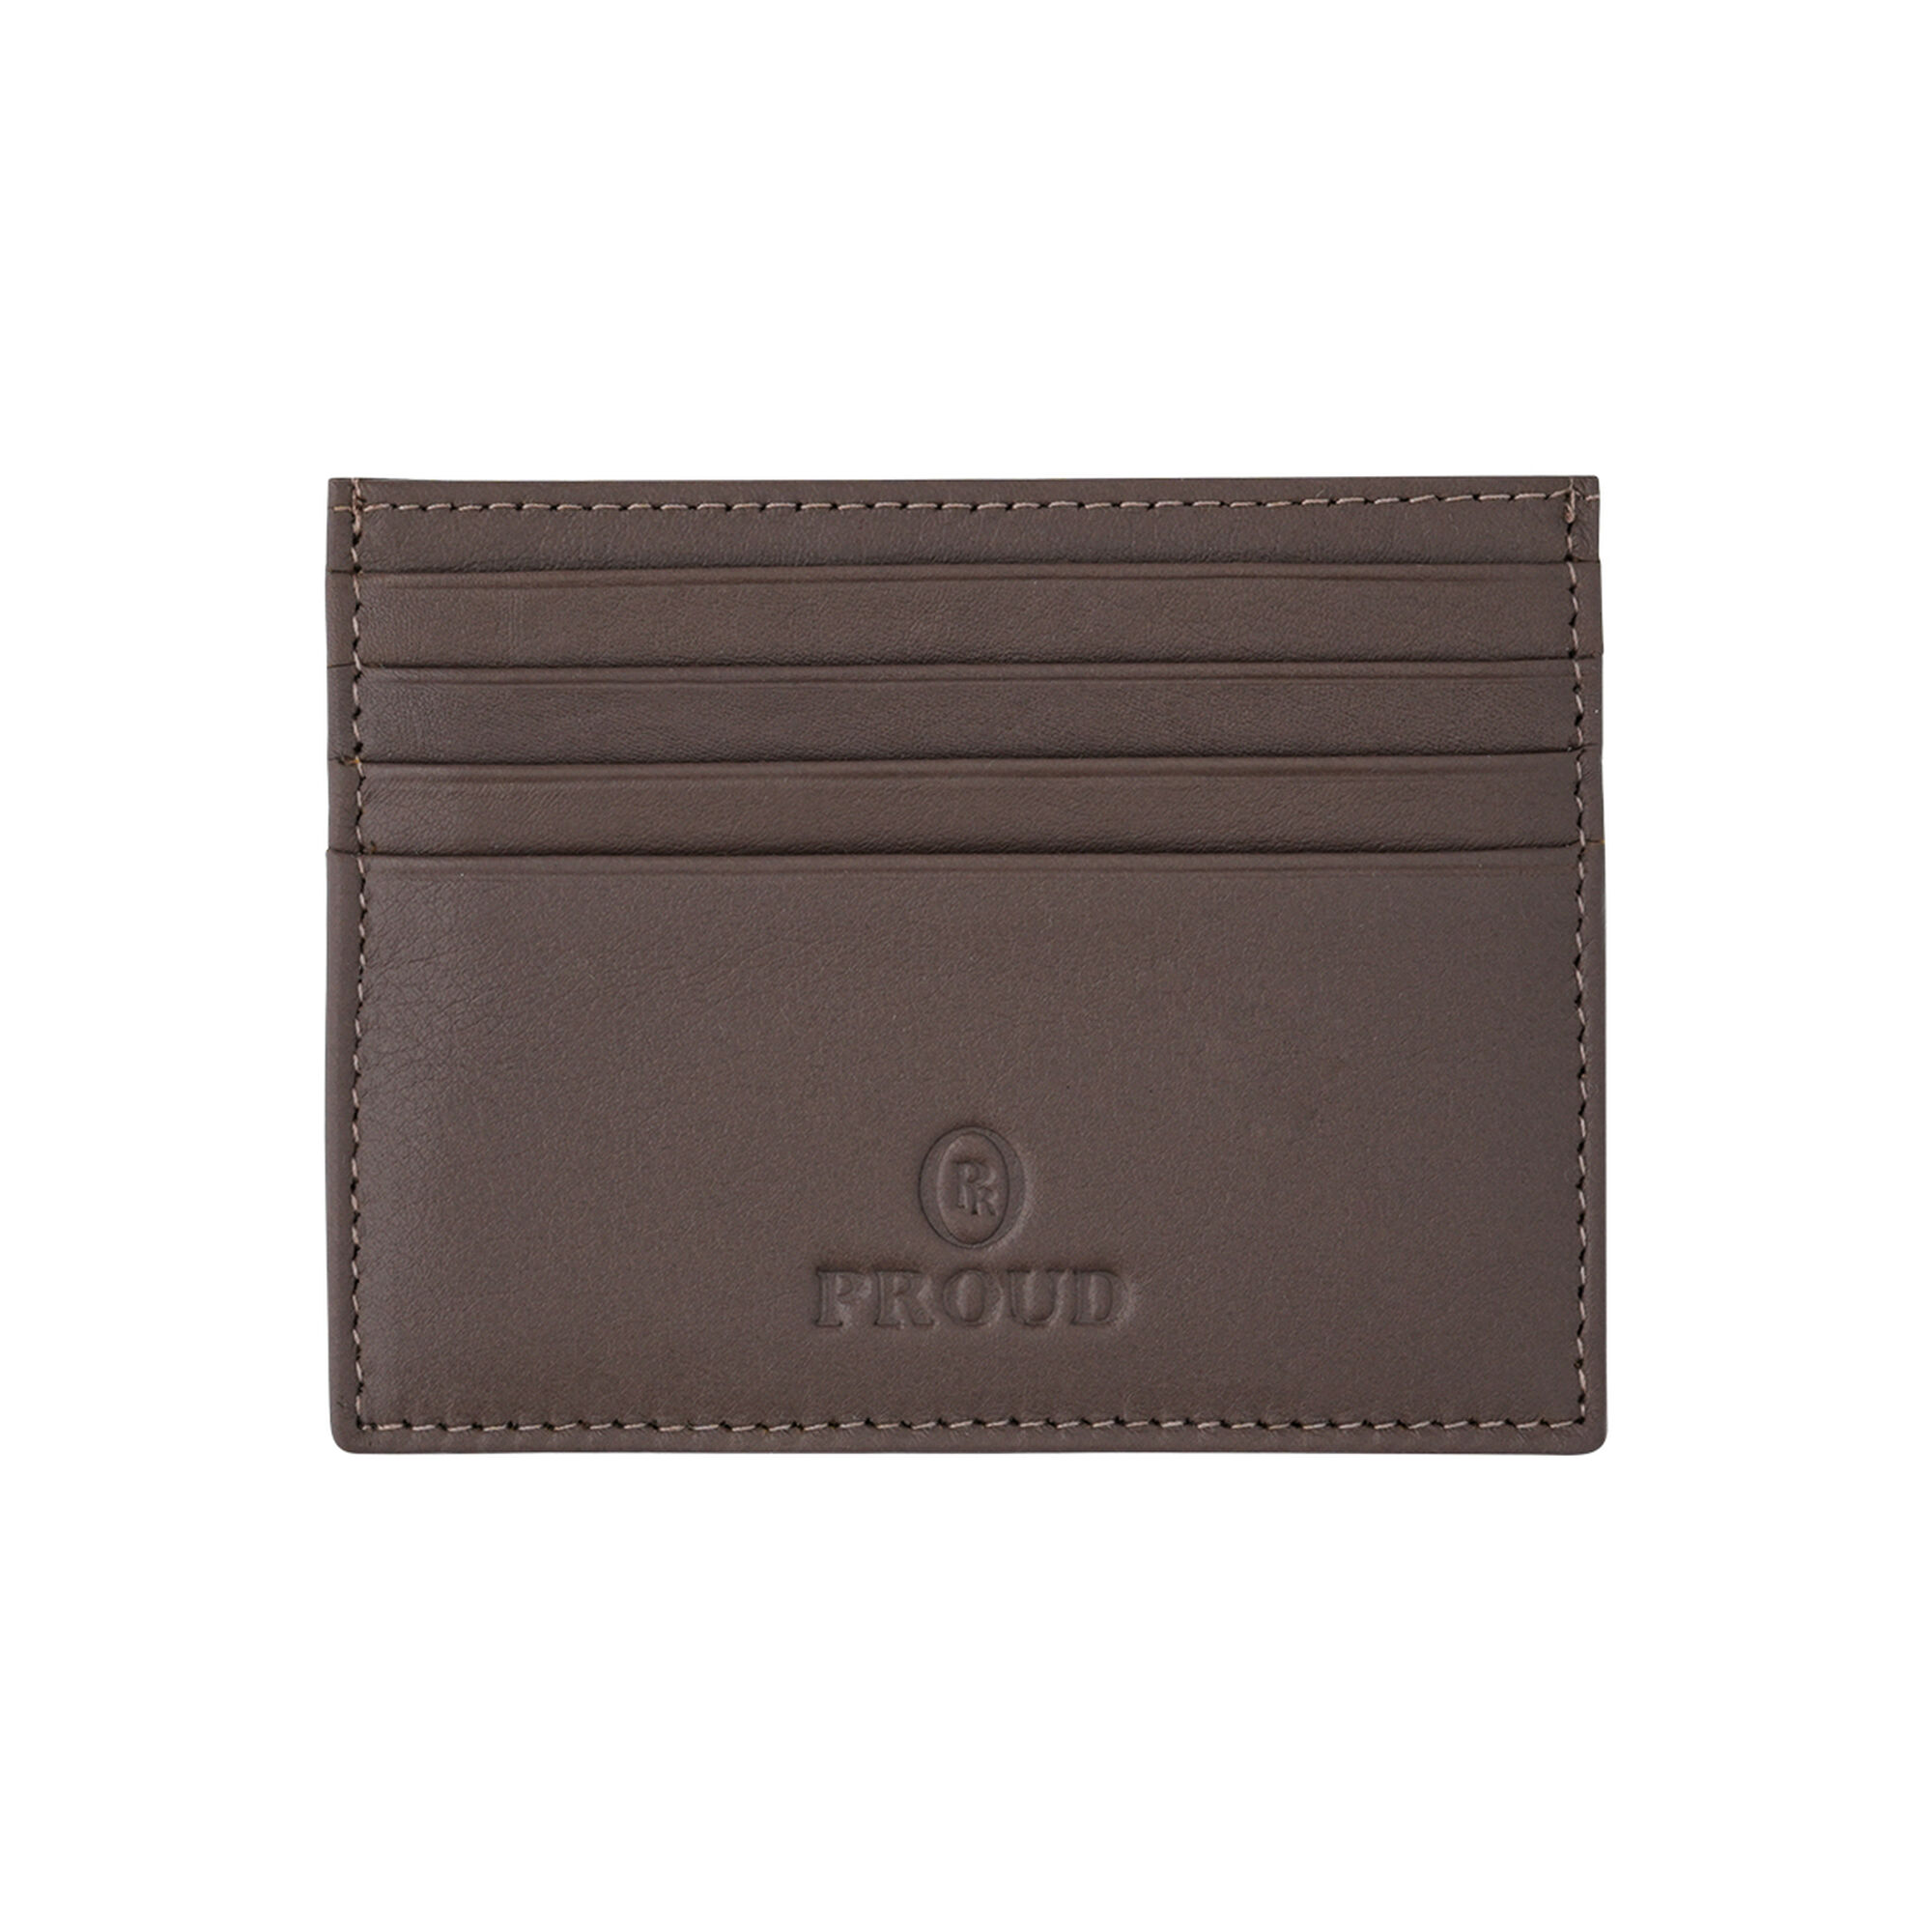 Proud Wallet IN11828-E-Burgundy MA Y23 + Box